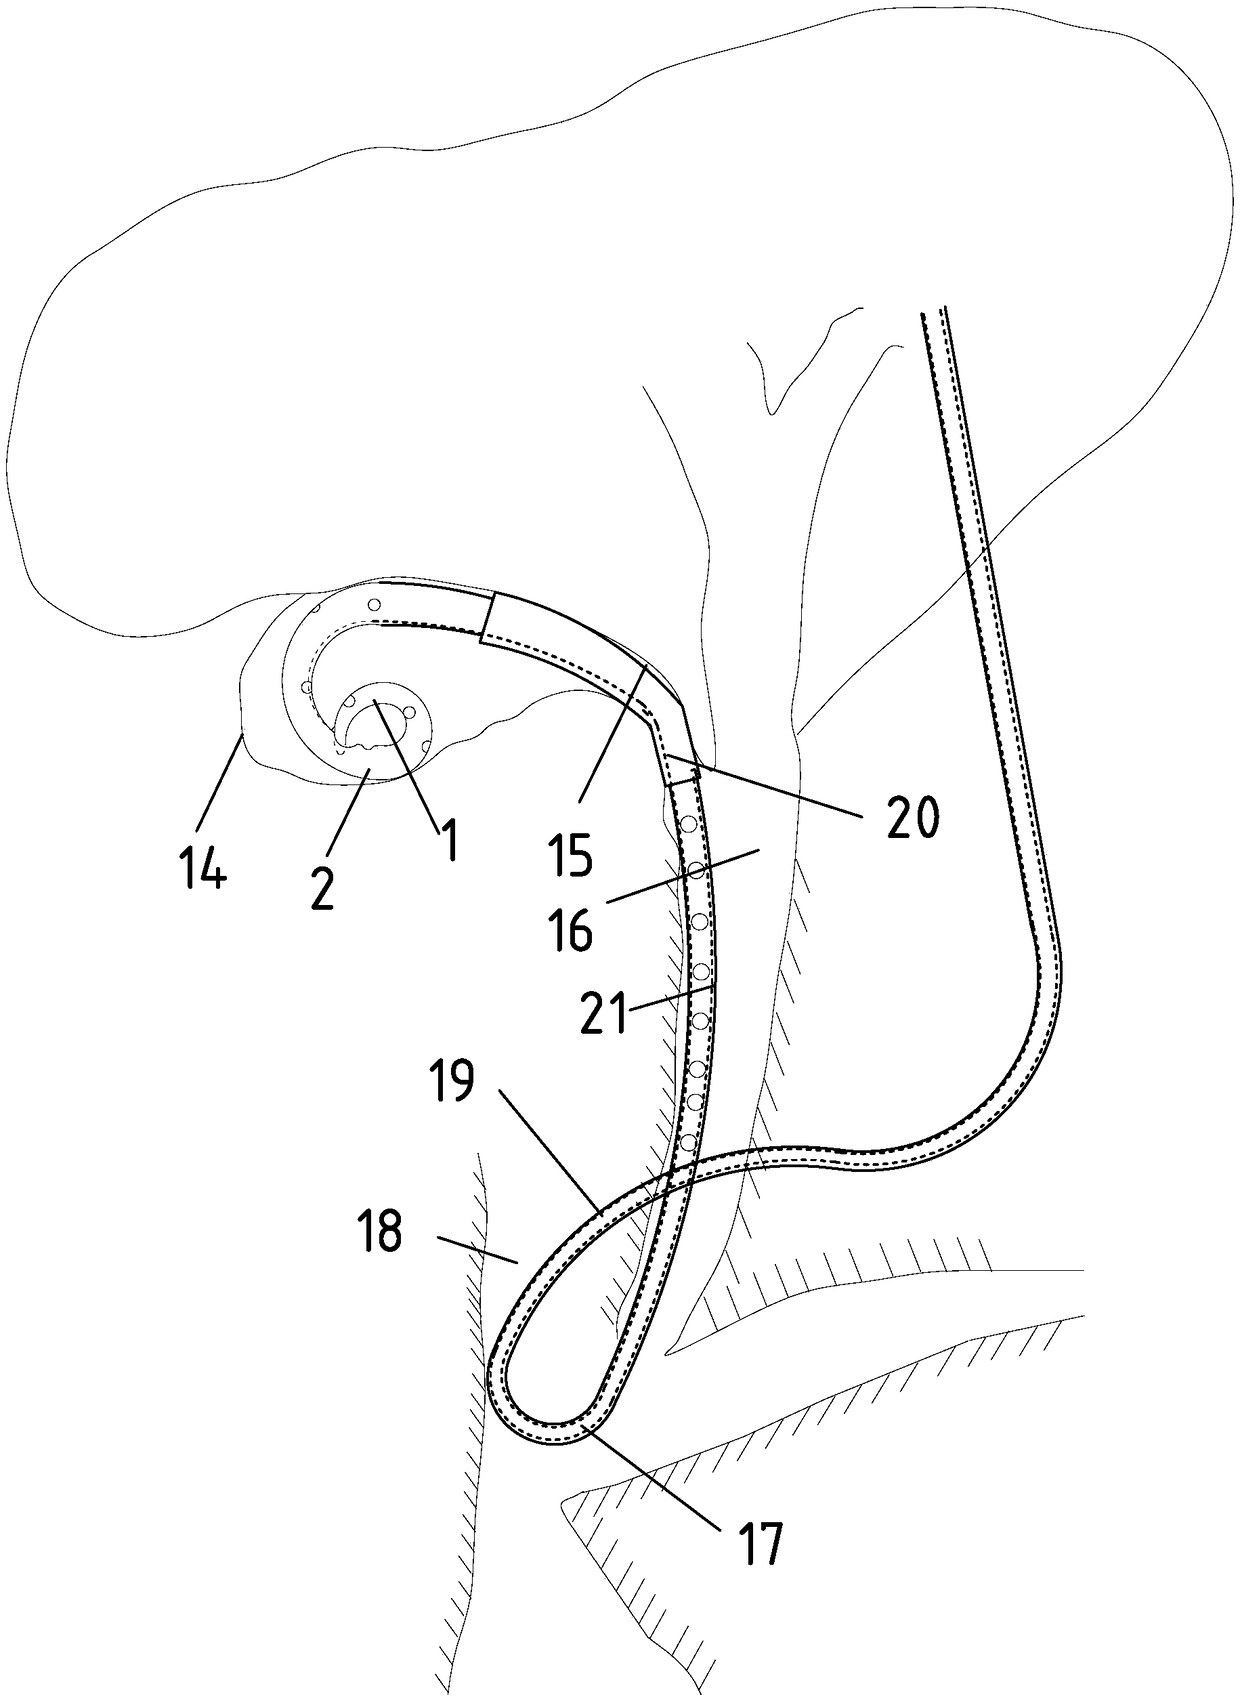 Nasal gallbladder bile drainage catheter with expansile saccule